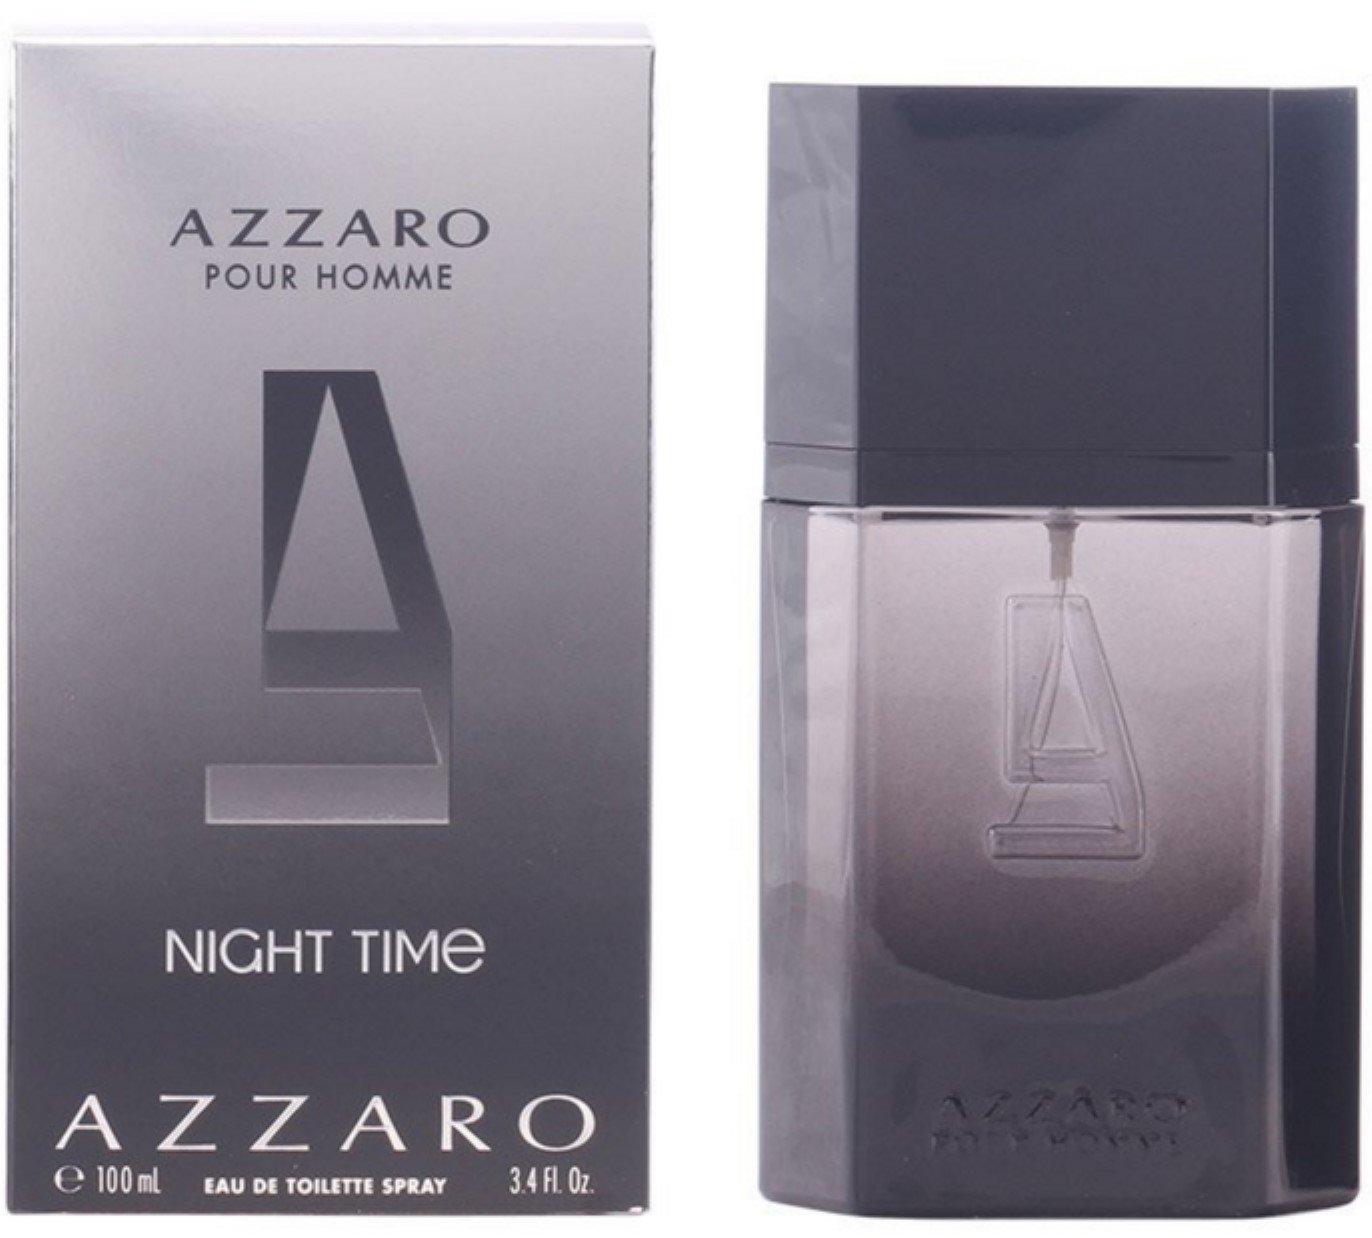 Azzaro Night Time by Azzaro Men 3.4 oz Eau de Toilette Spray | FragranceBaba.com